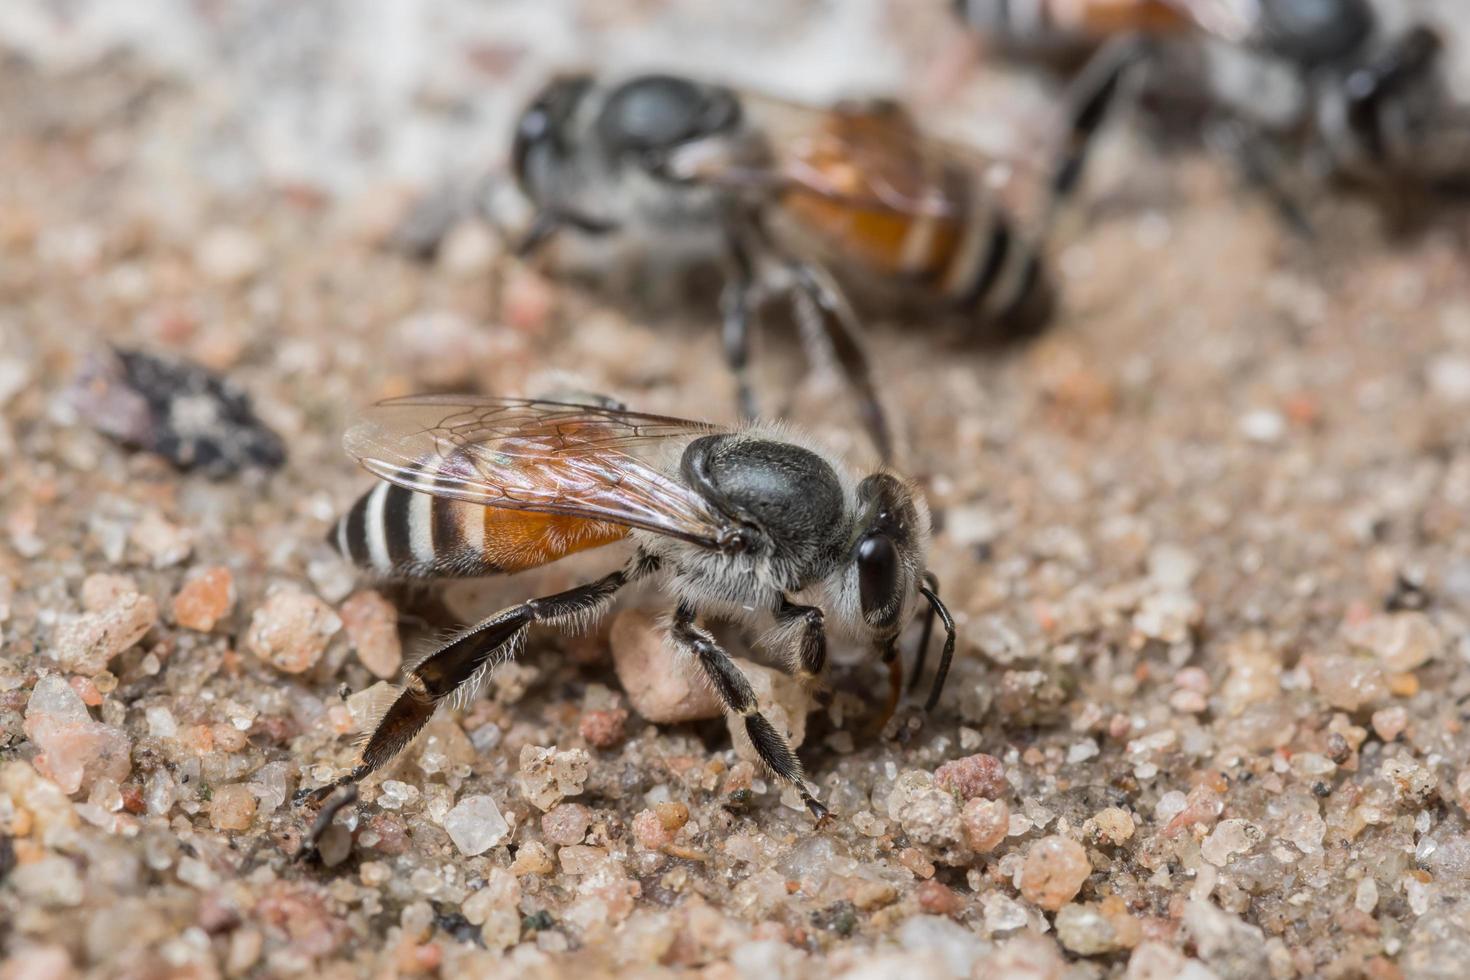 Bees feeding on the ground photo